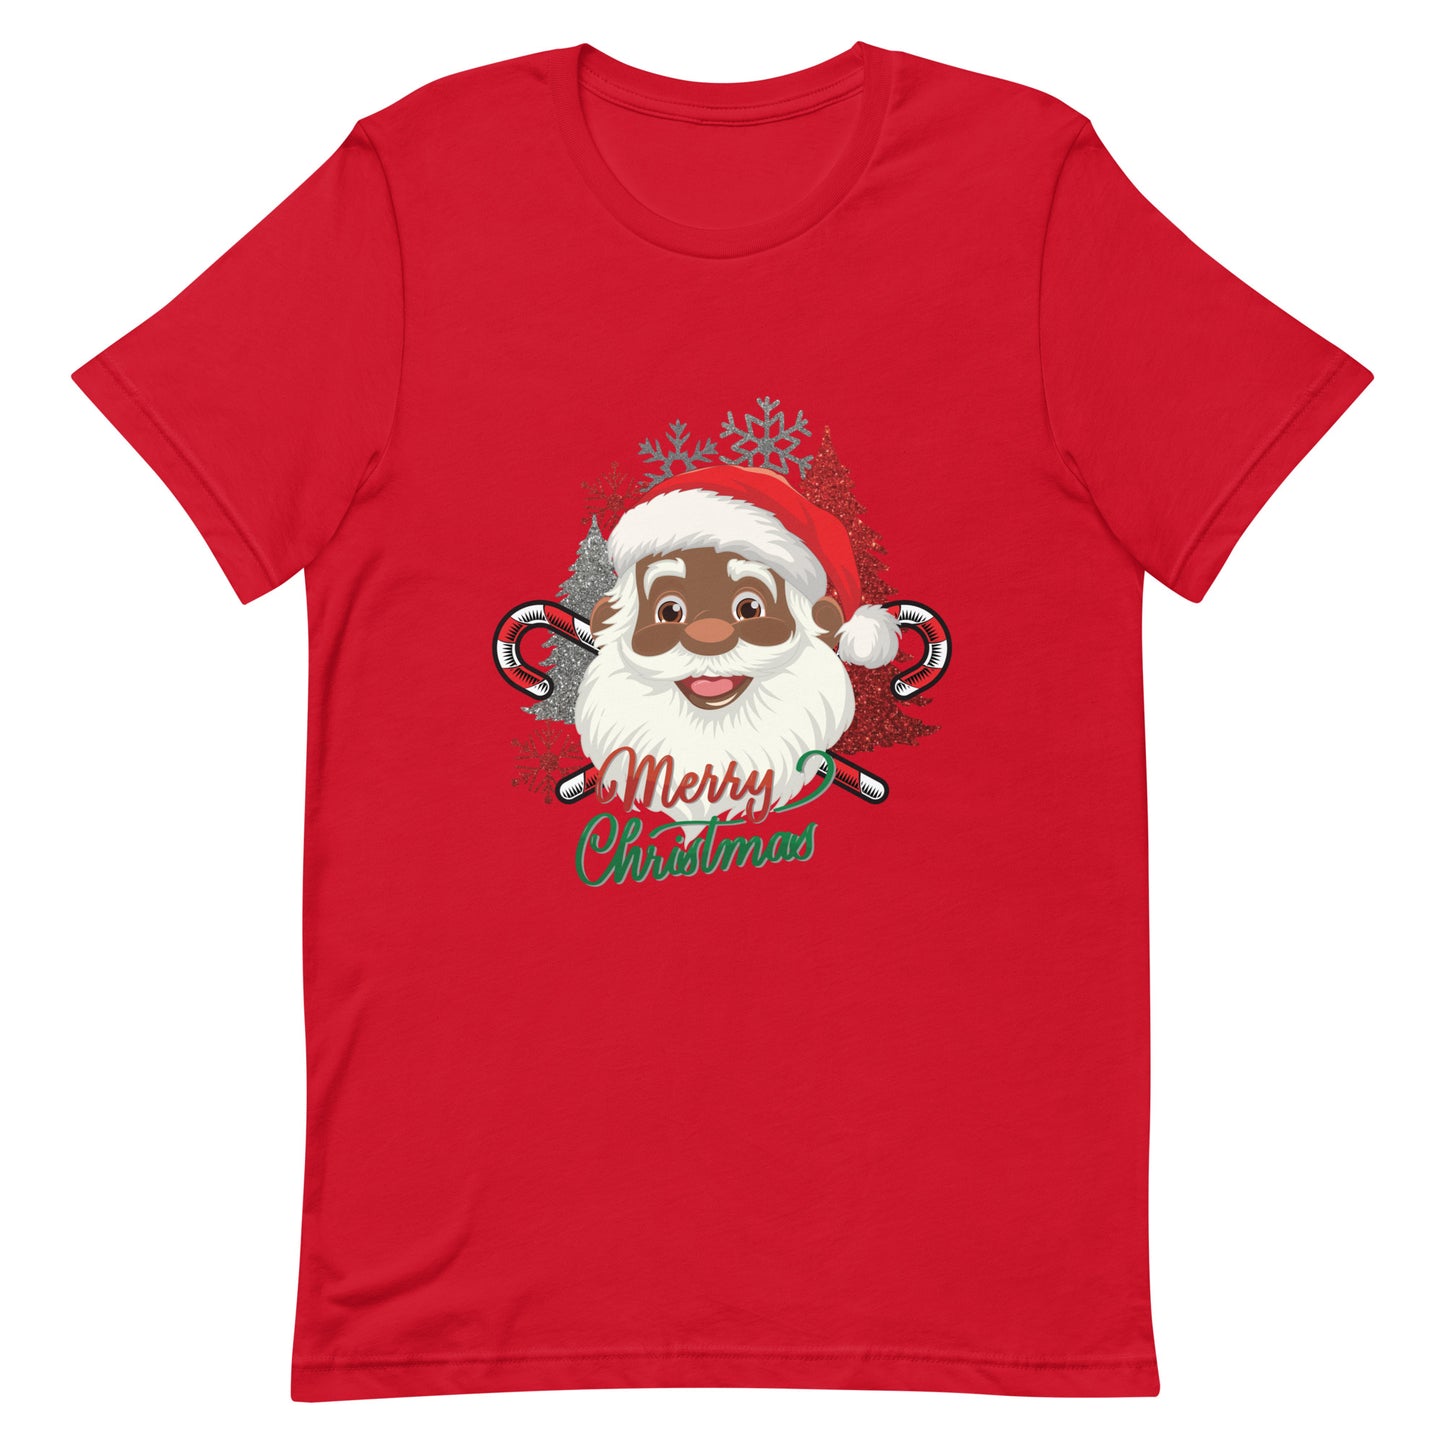 Merry Christmas Red Hat Santa Unisex t-shirt